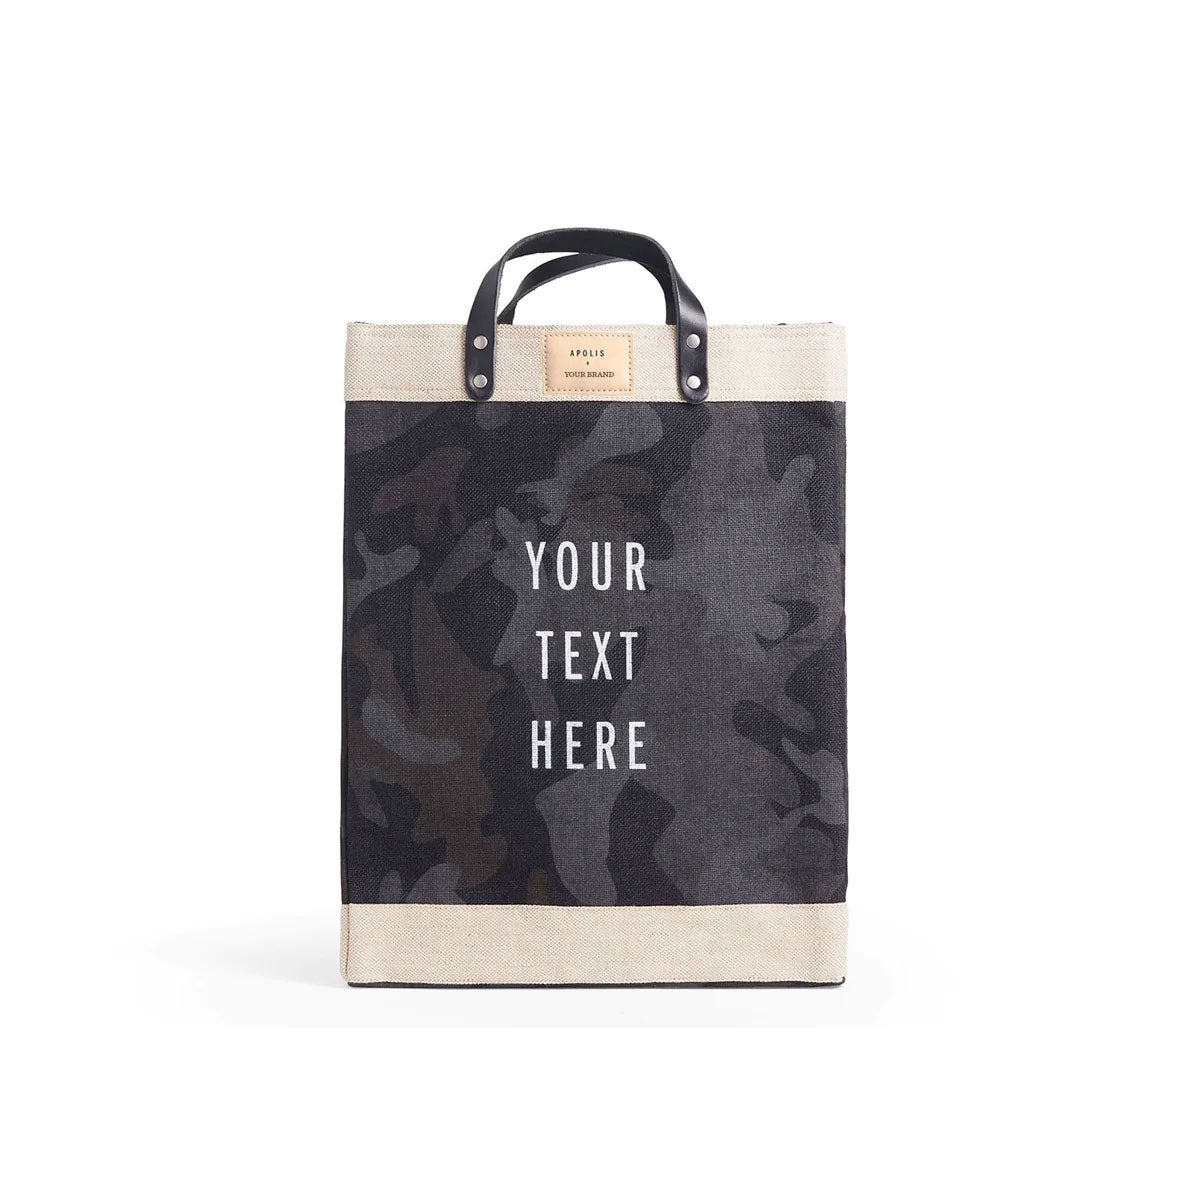 Customized Market Bag in Shadow Safari - Wholesale